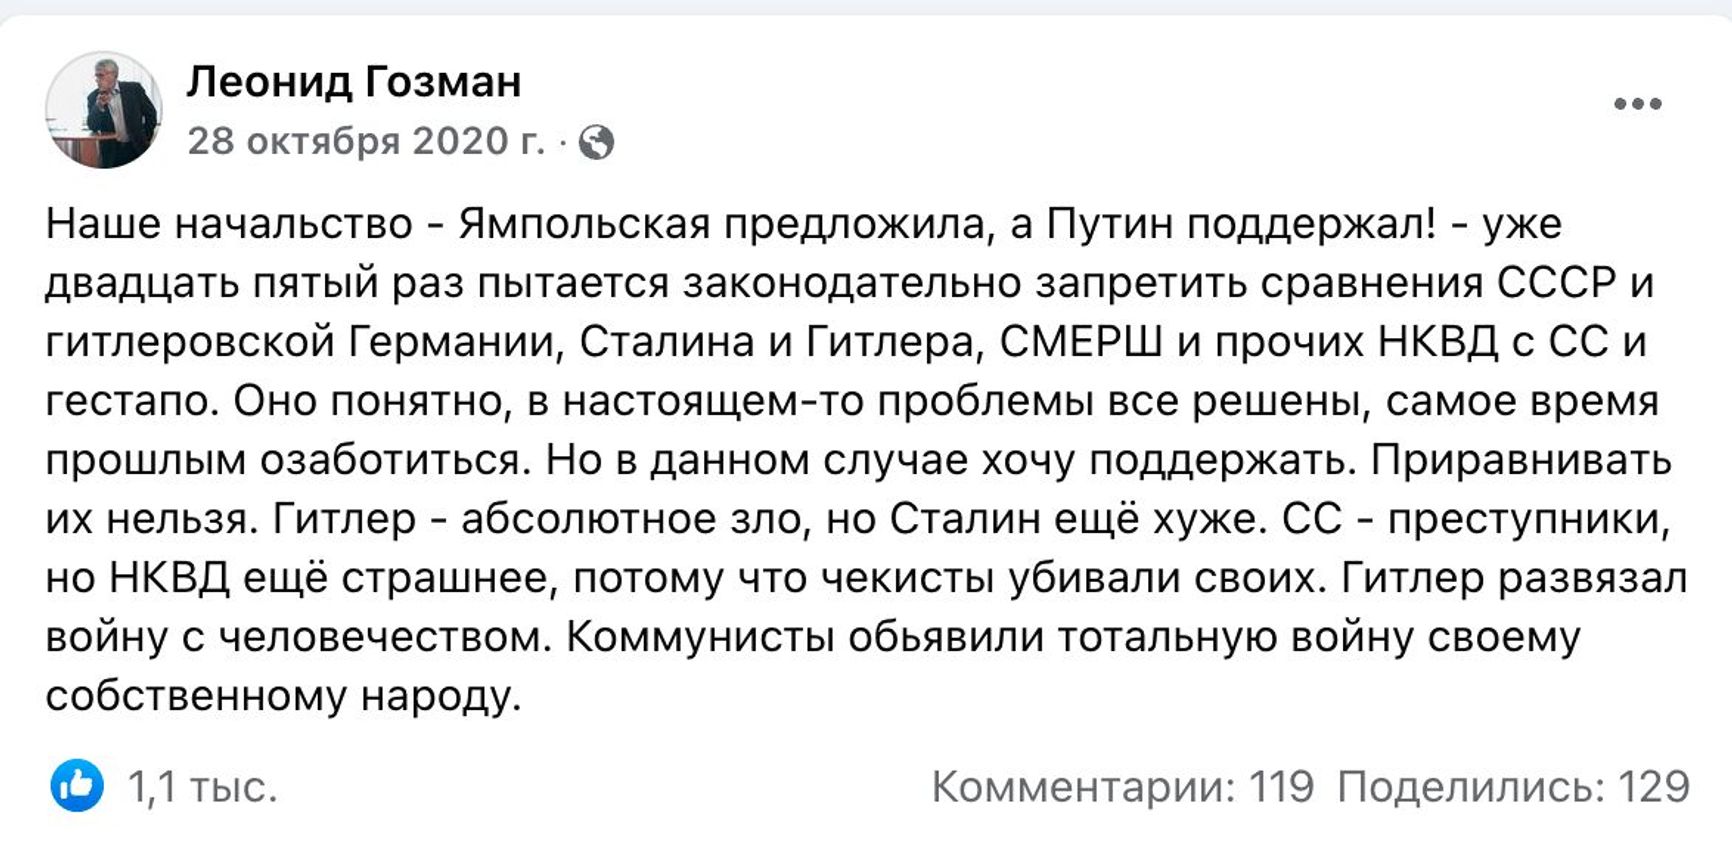 Политика Леонида Гозмана снова задержали. На этот раз на выходе из спецприемника, где он отбывал 15 суток ареста из-за поста в Facebook